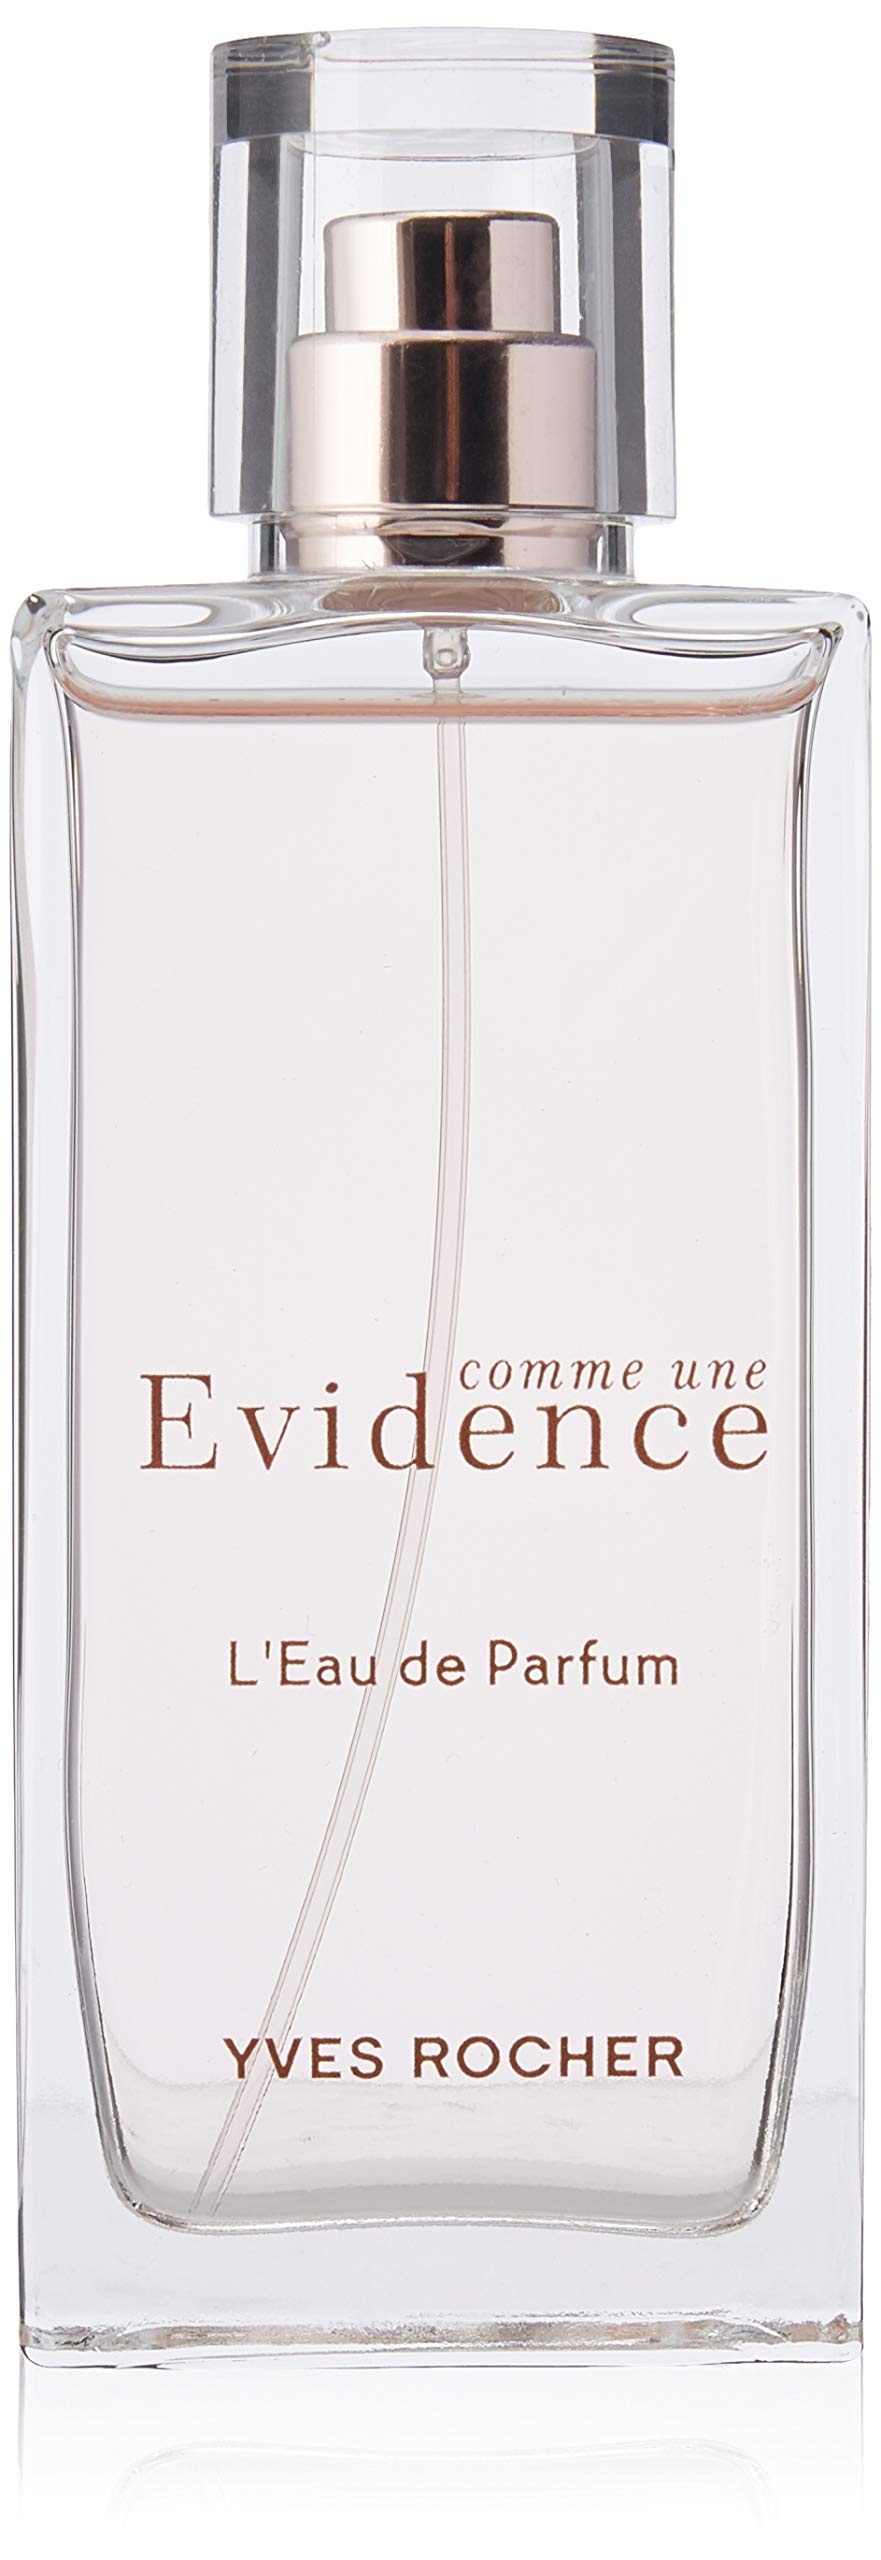 Yves Rocher Evidence Woman 50 ml Eau de Parfum